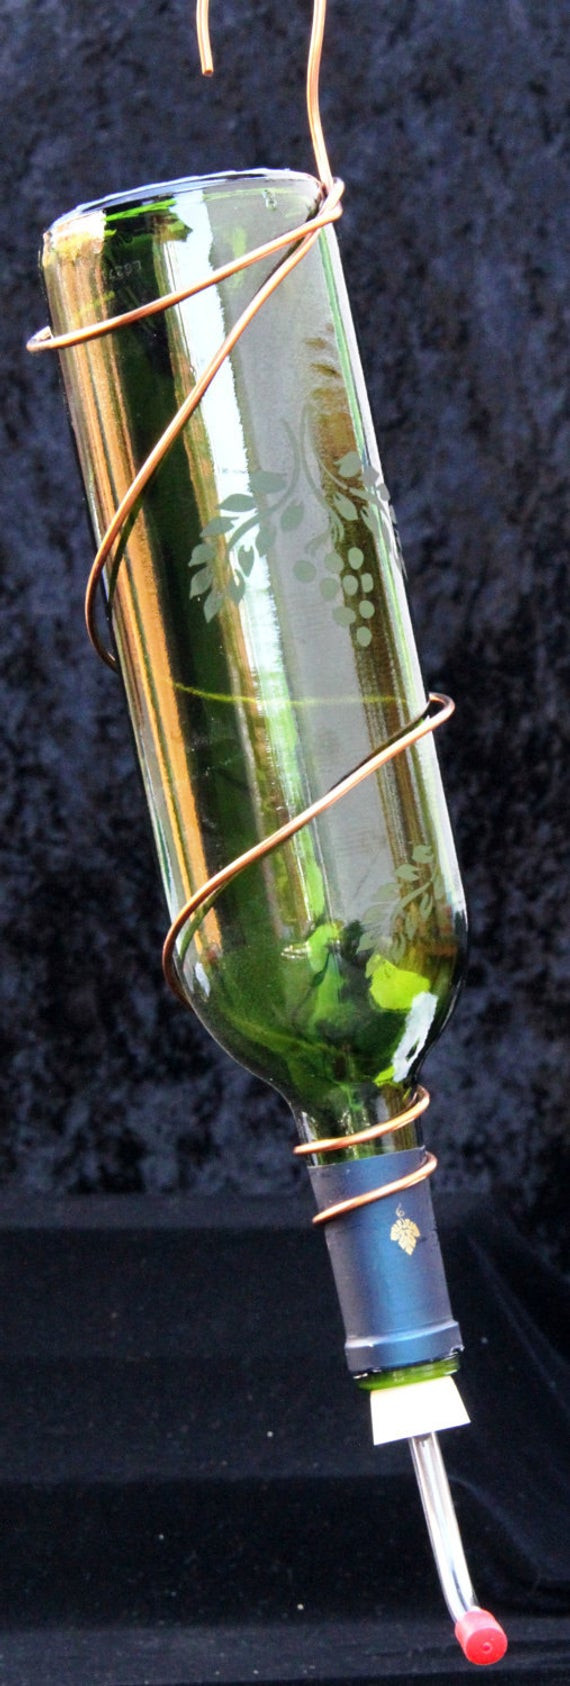 Best ideas about DIY Wine Bottle Hummingbird Feeder
. Save or Pin Wine Bottle Hummingbird Feeder Now.